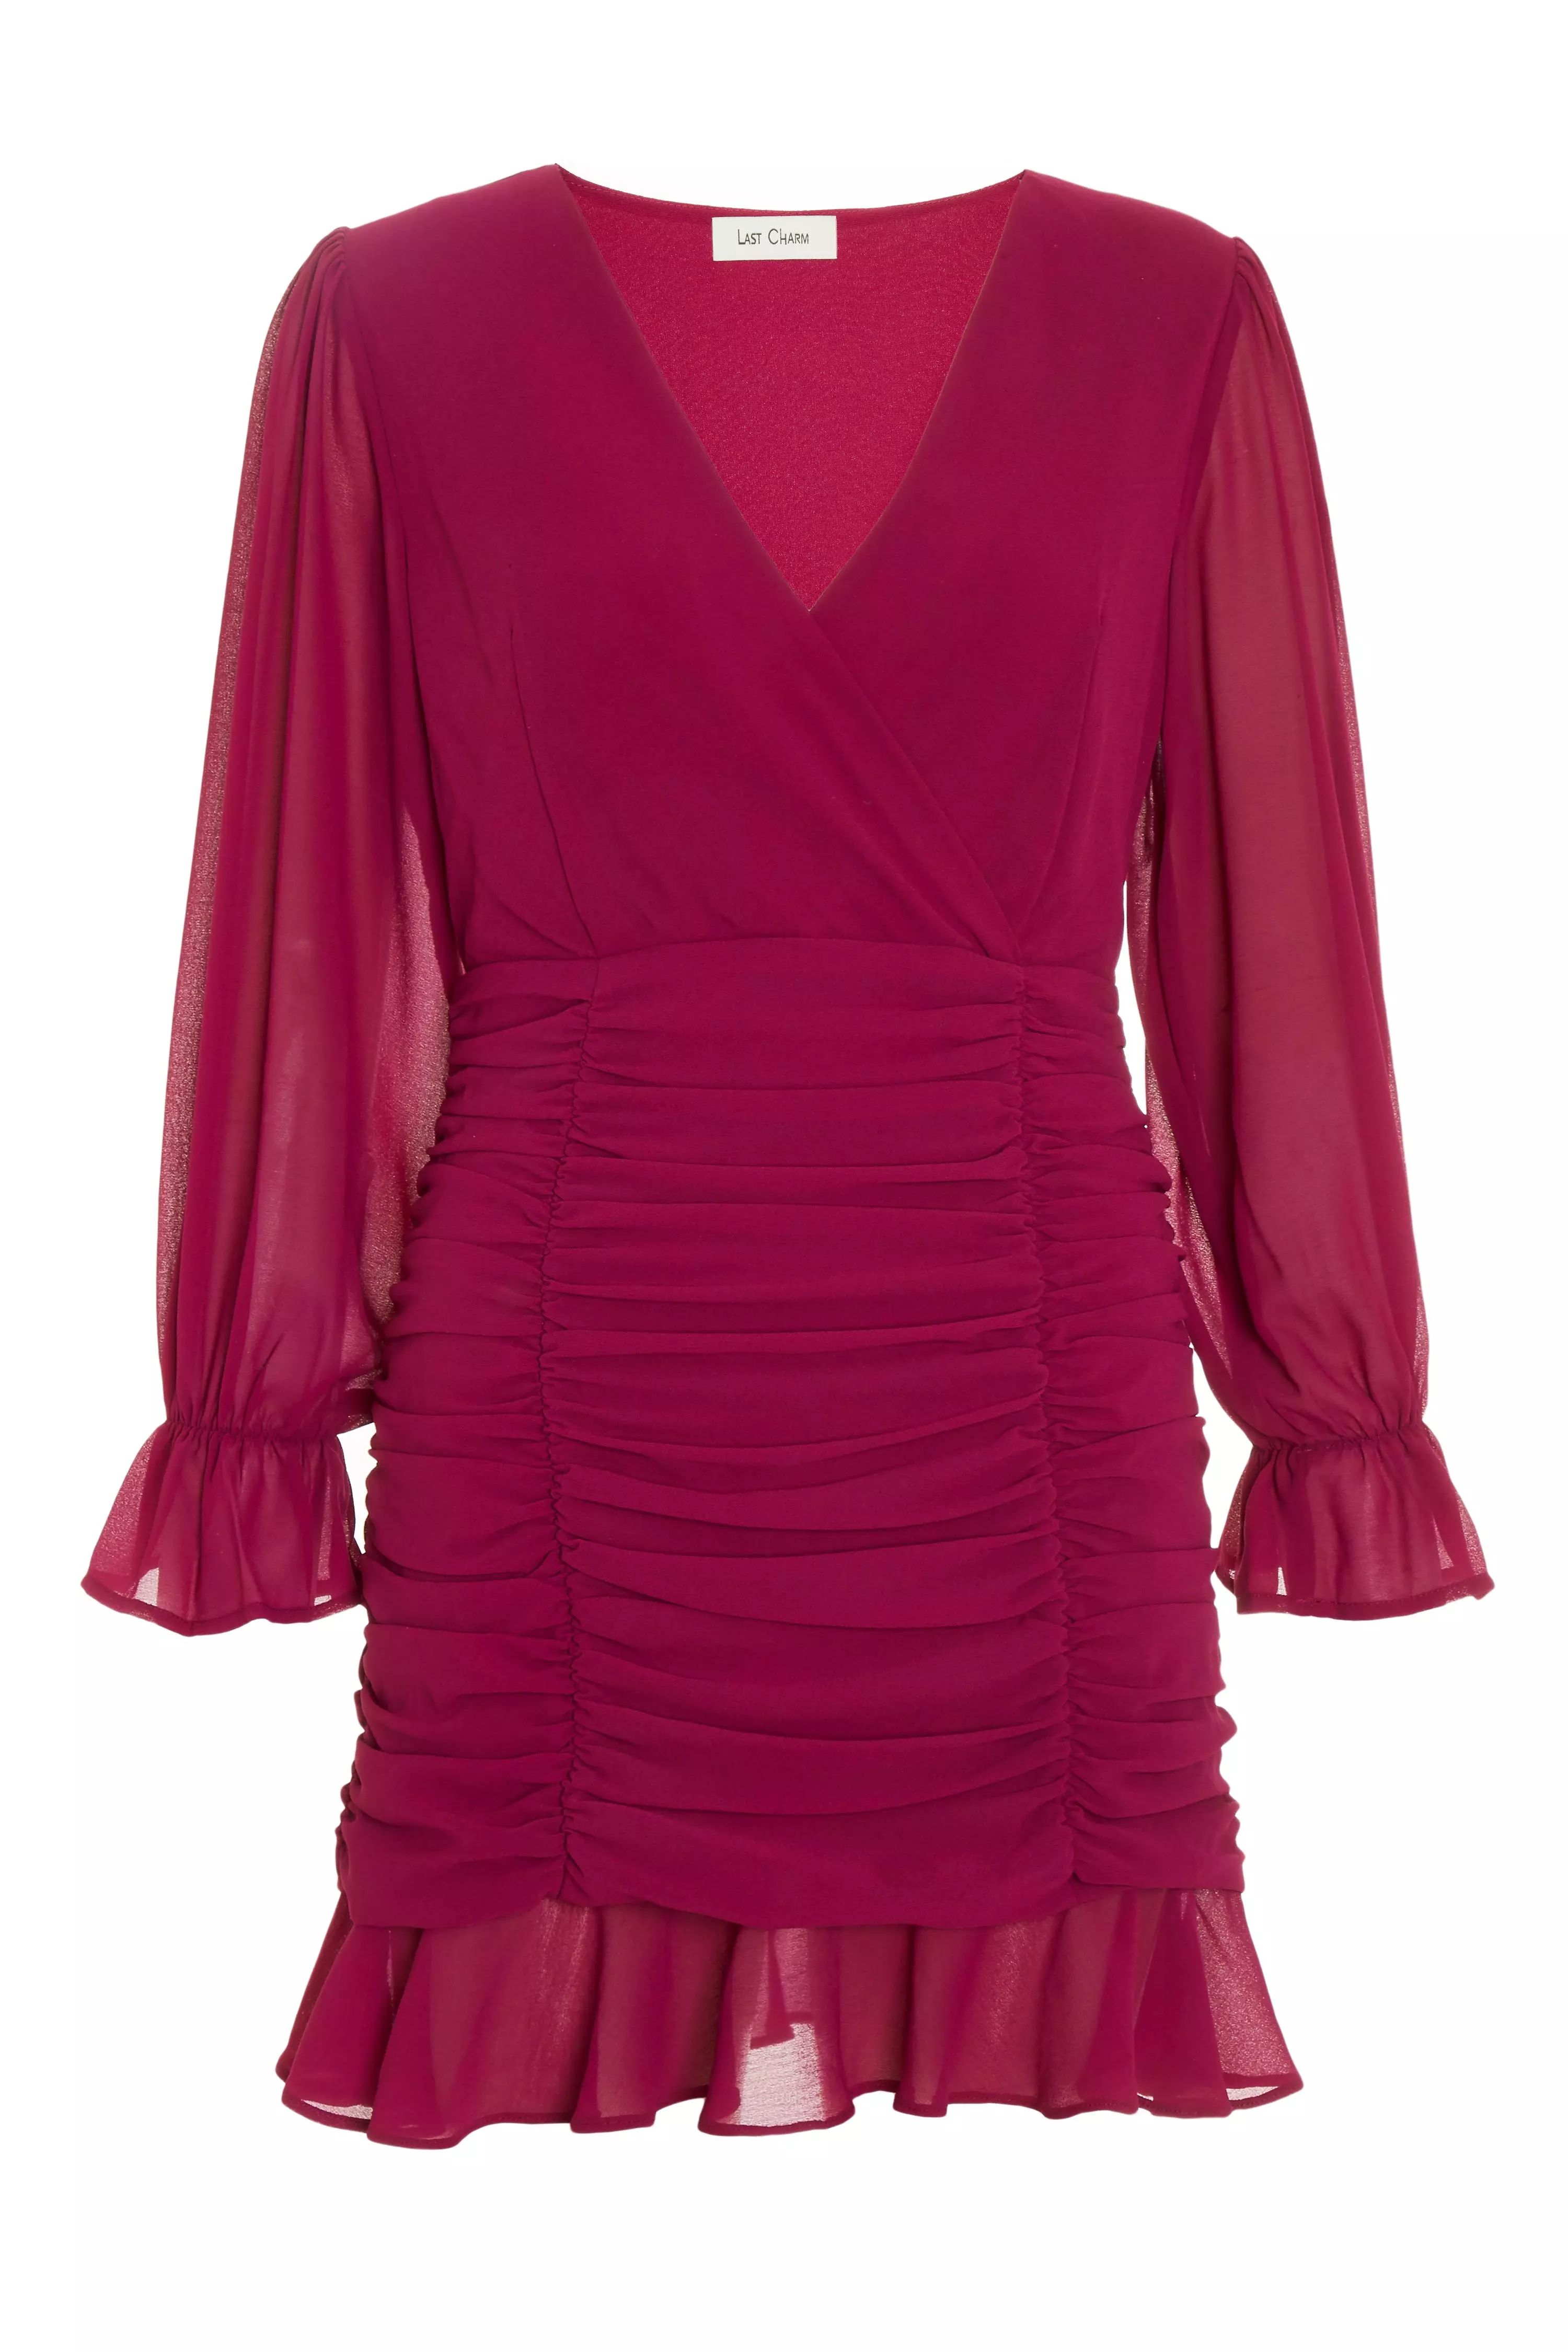 Petite Berry Chiffon Long Sleeve Wrap Dress - QUIZ Clothing